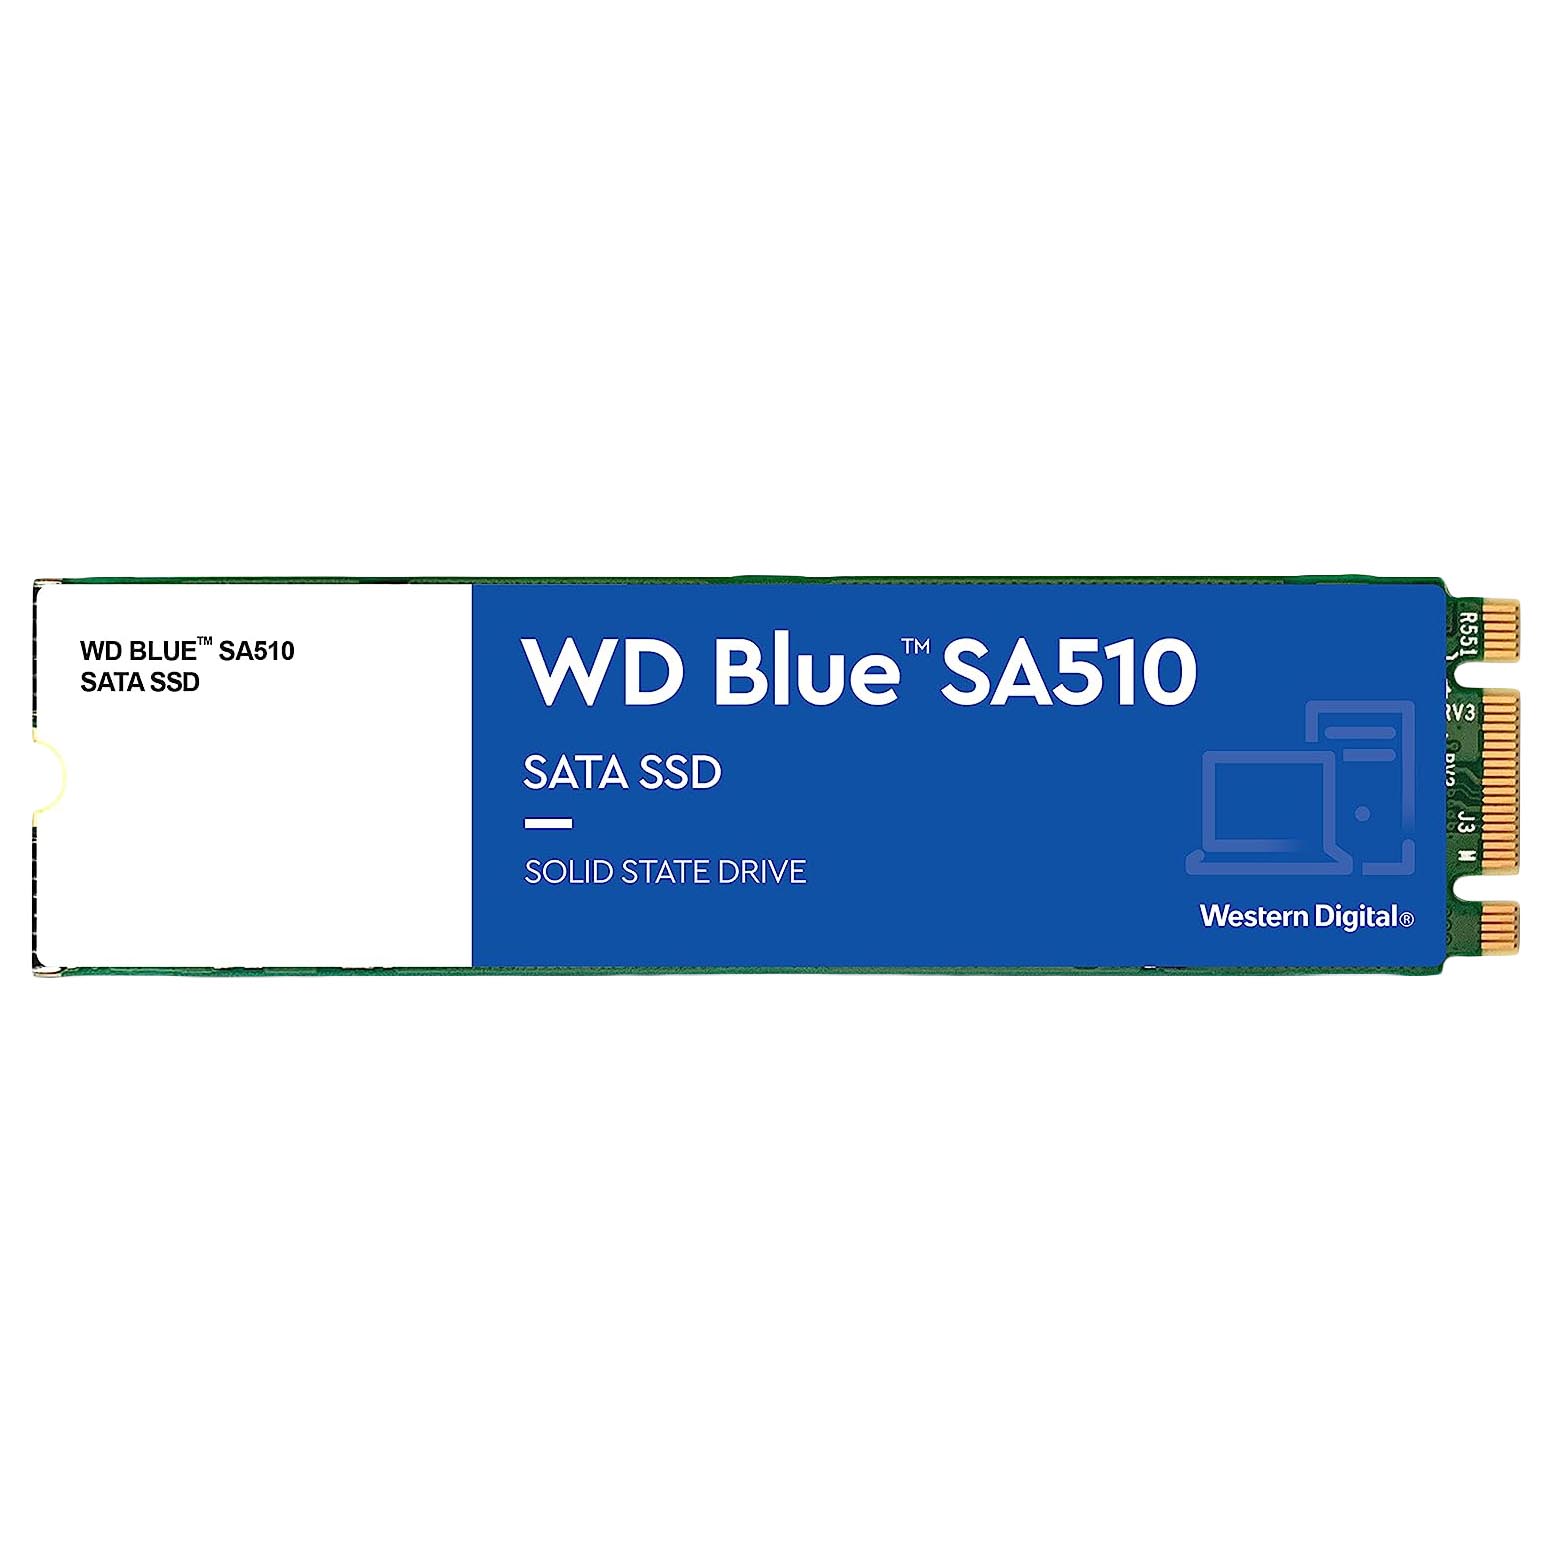 внутренний твердотельный накопитель western digital sn570 wds500g3b0c 500гб м 2 2280 Внутренний твердотельный накопитель Western Digital WD Blue SA510, WDS500G3B0B, 500Гб, M.2 2280